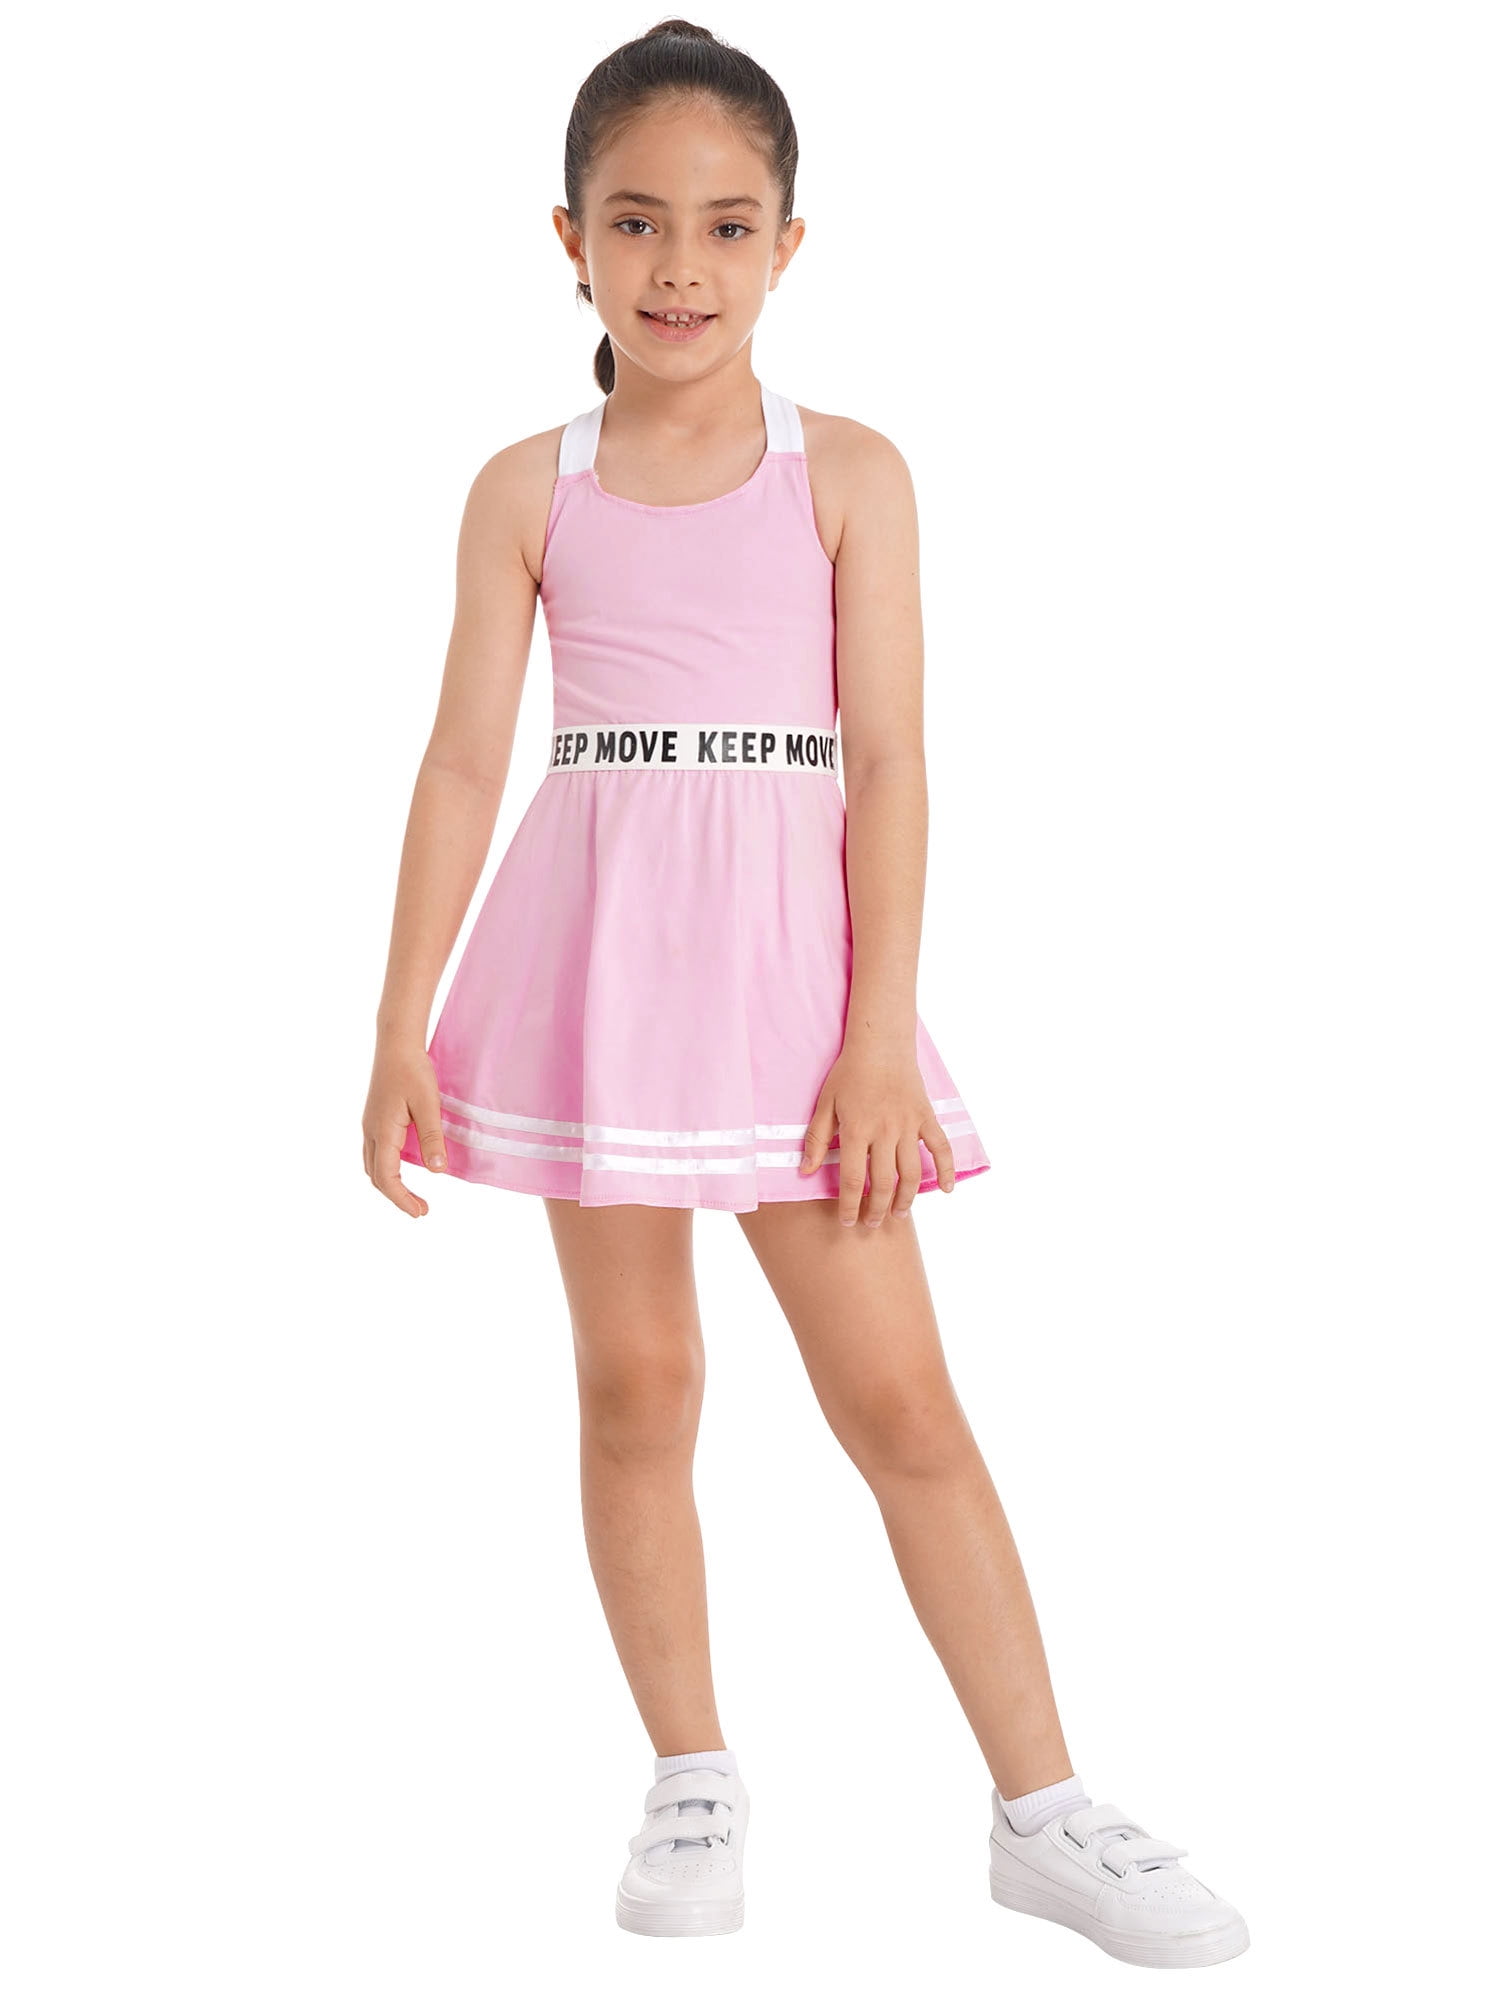 YEAHDOR Kids Girls Sports Suit Straps Cross at Rear A-Line Dress